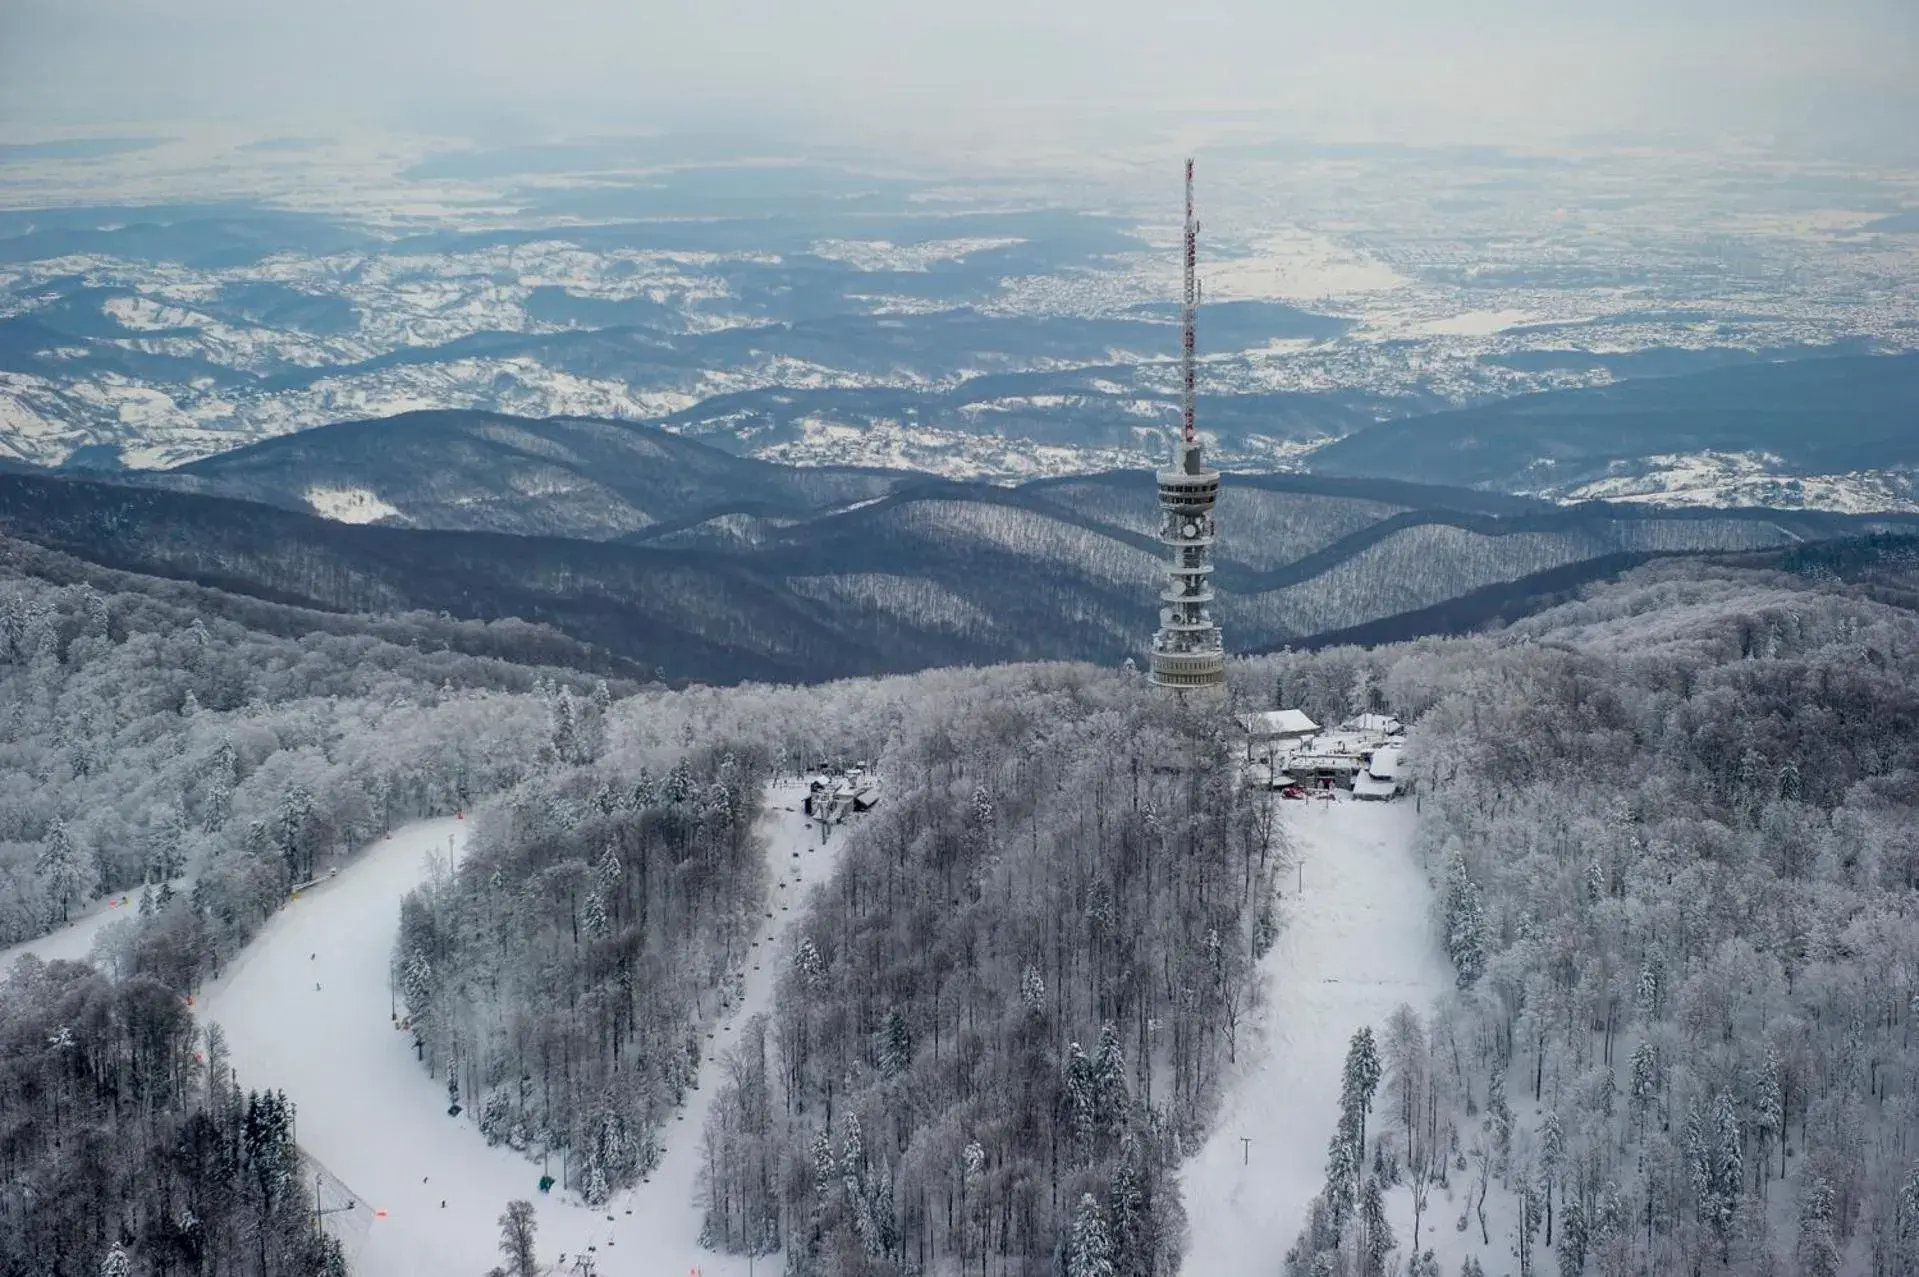 Skiing, Bird's-eye View in Hotel Tomislavov Dom